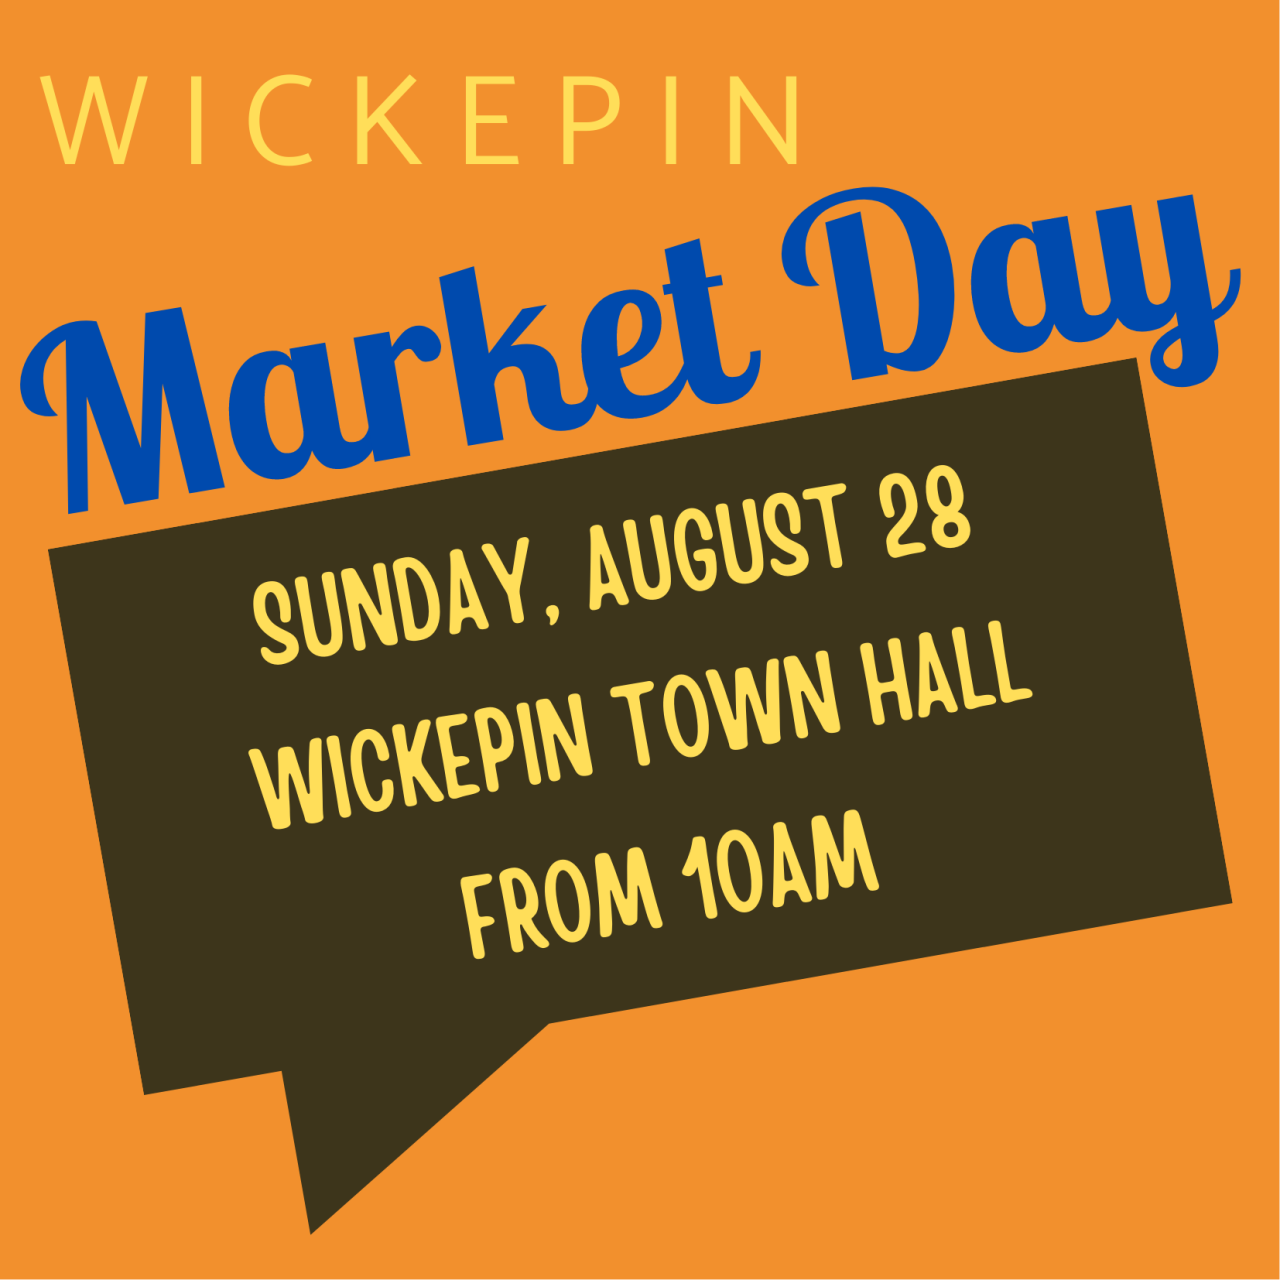 Wickepin Market Day!